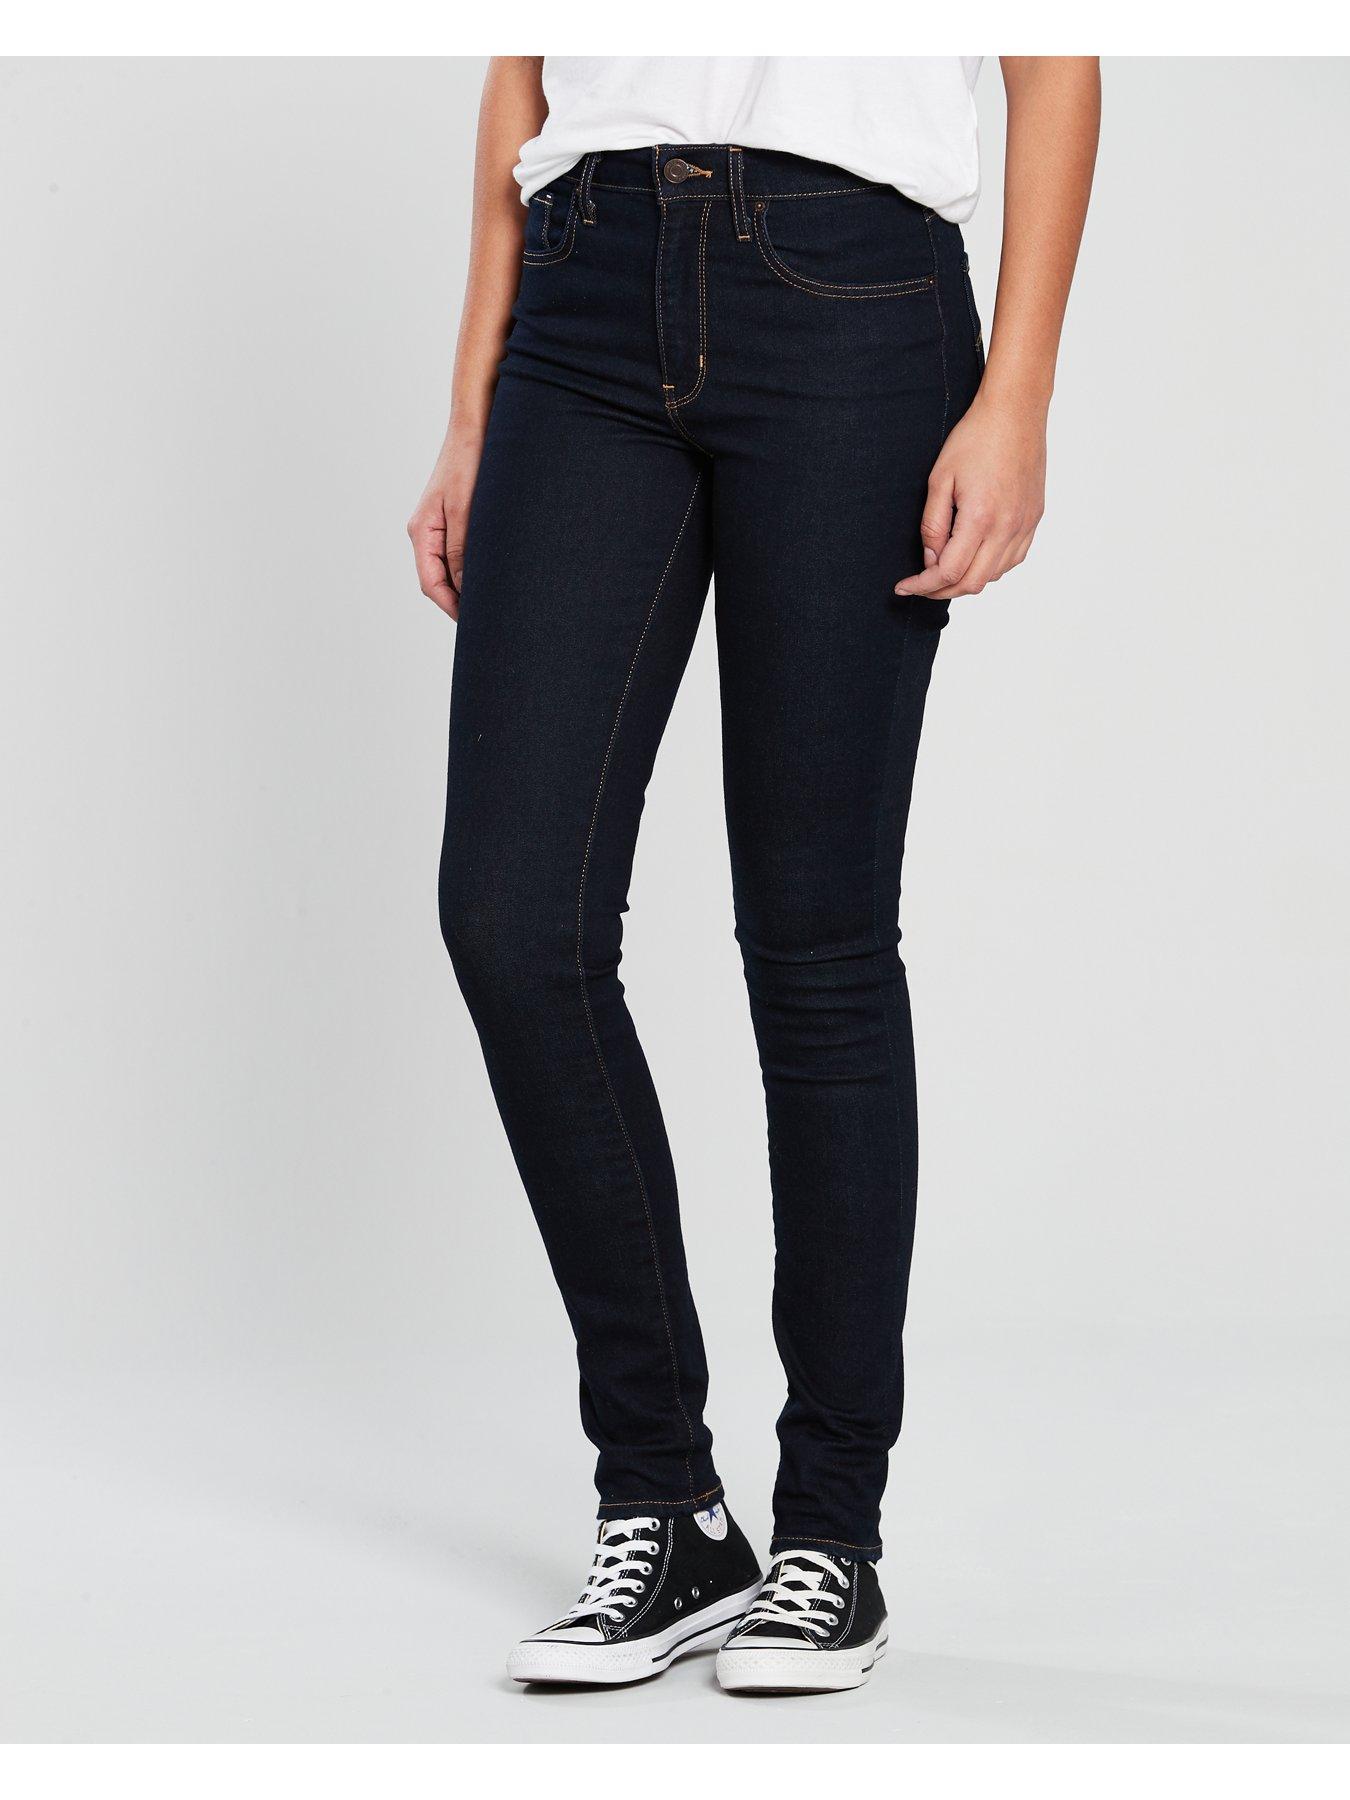 womens levis skinny jeans uk